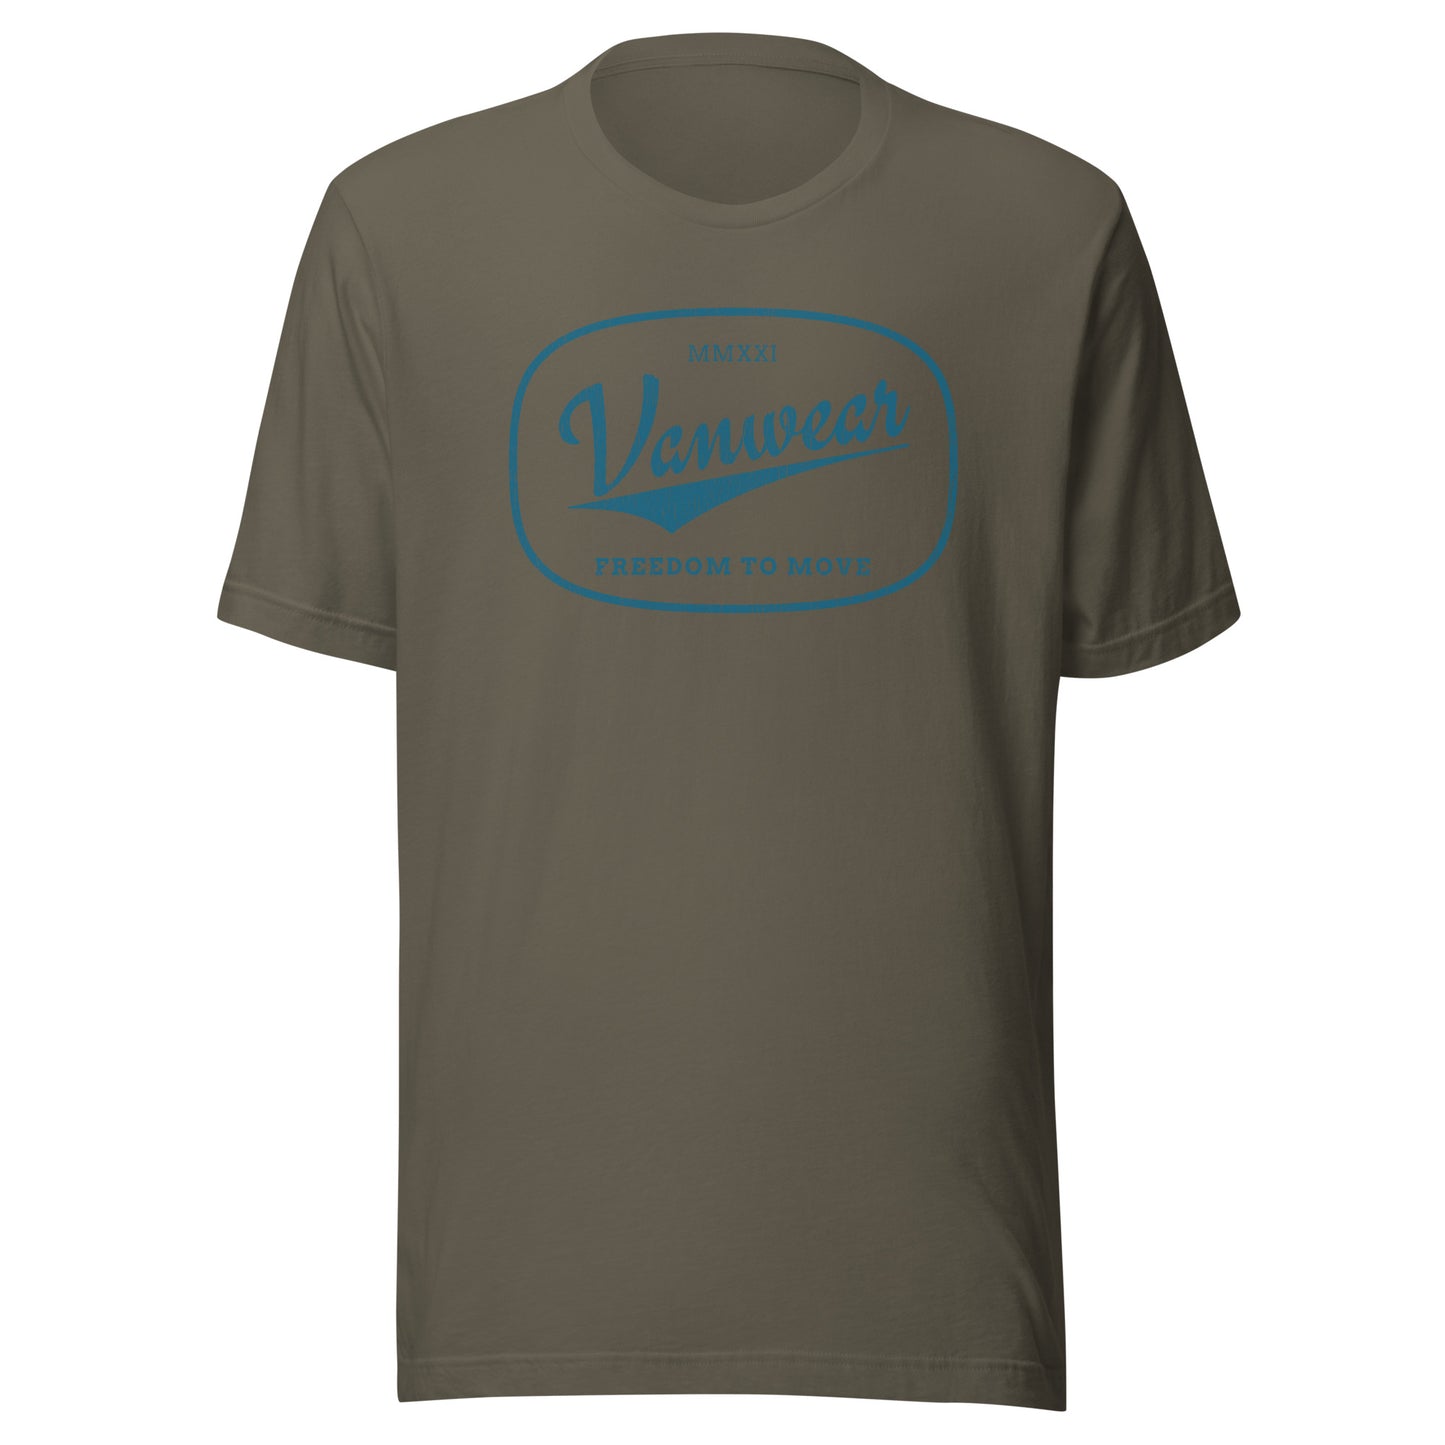 Vanwear Authentic Retro Style Unisex Campervan T-Shirt